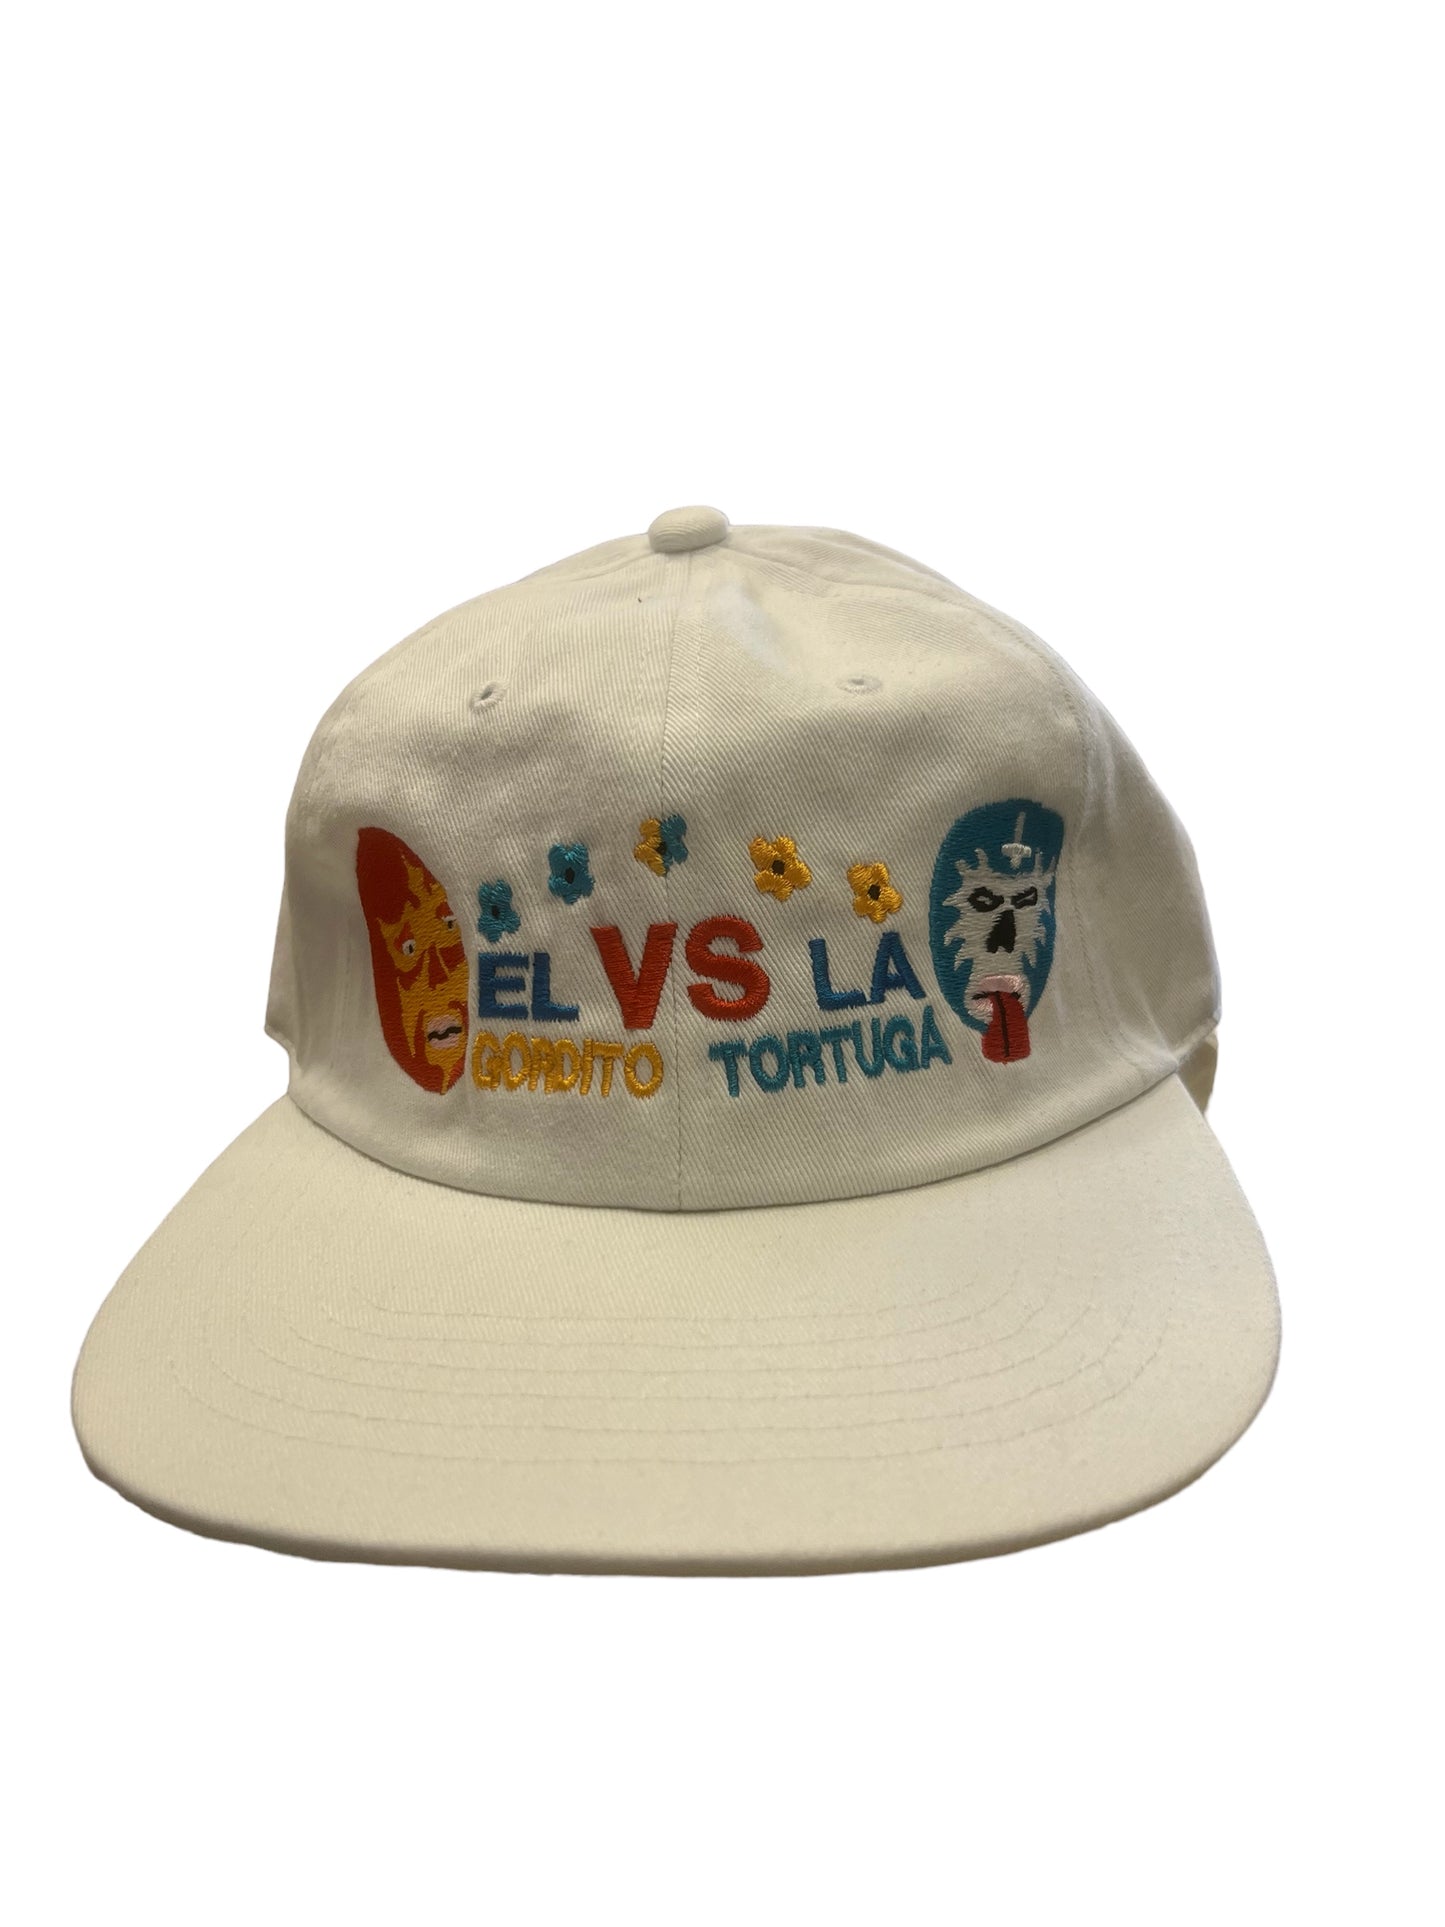 Capps Tortuga Hat